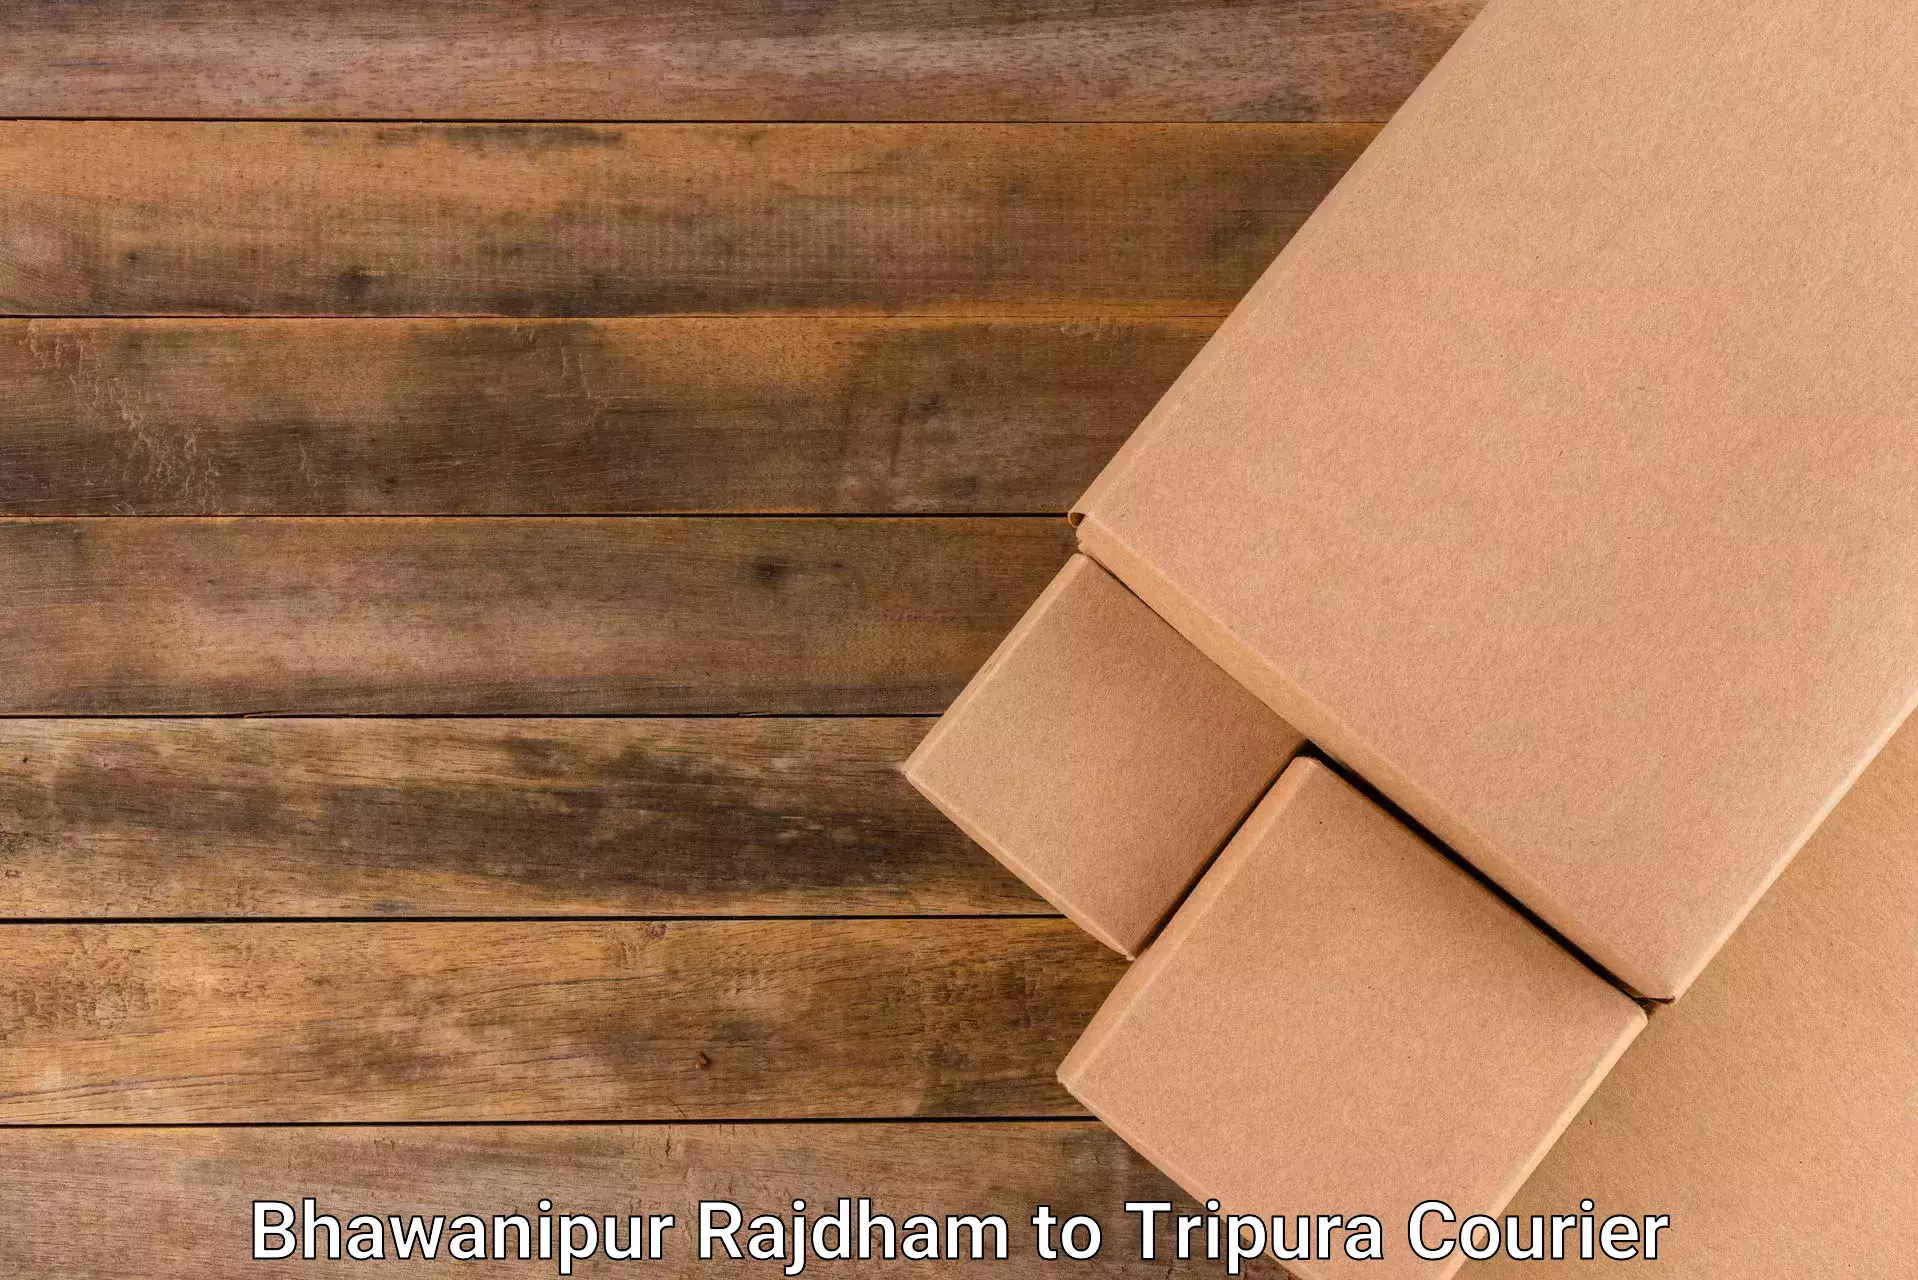 High-speed parcel service Bhawanipur Rajdham to Khowai